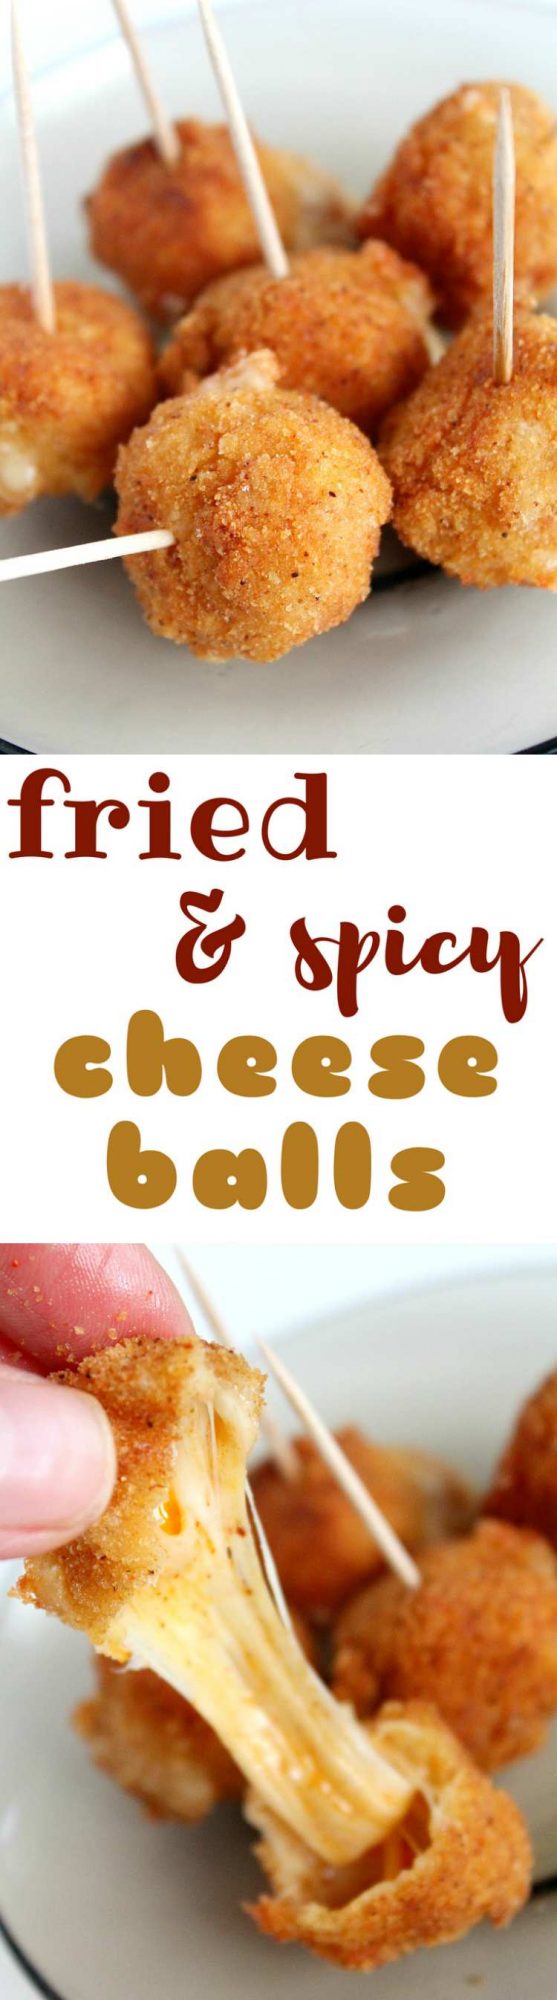 Spicy Cheese Balls Recipe